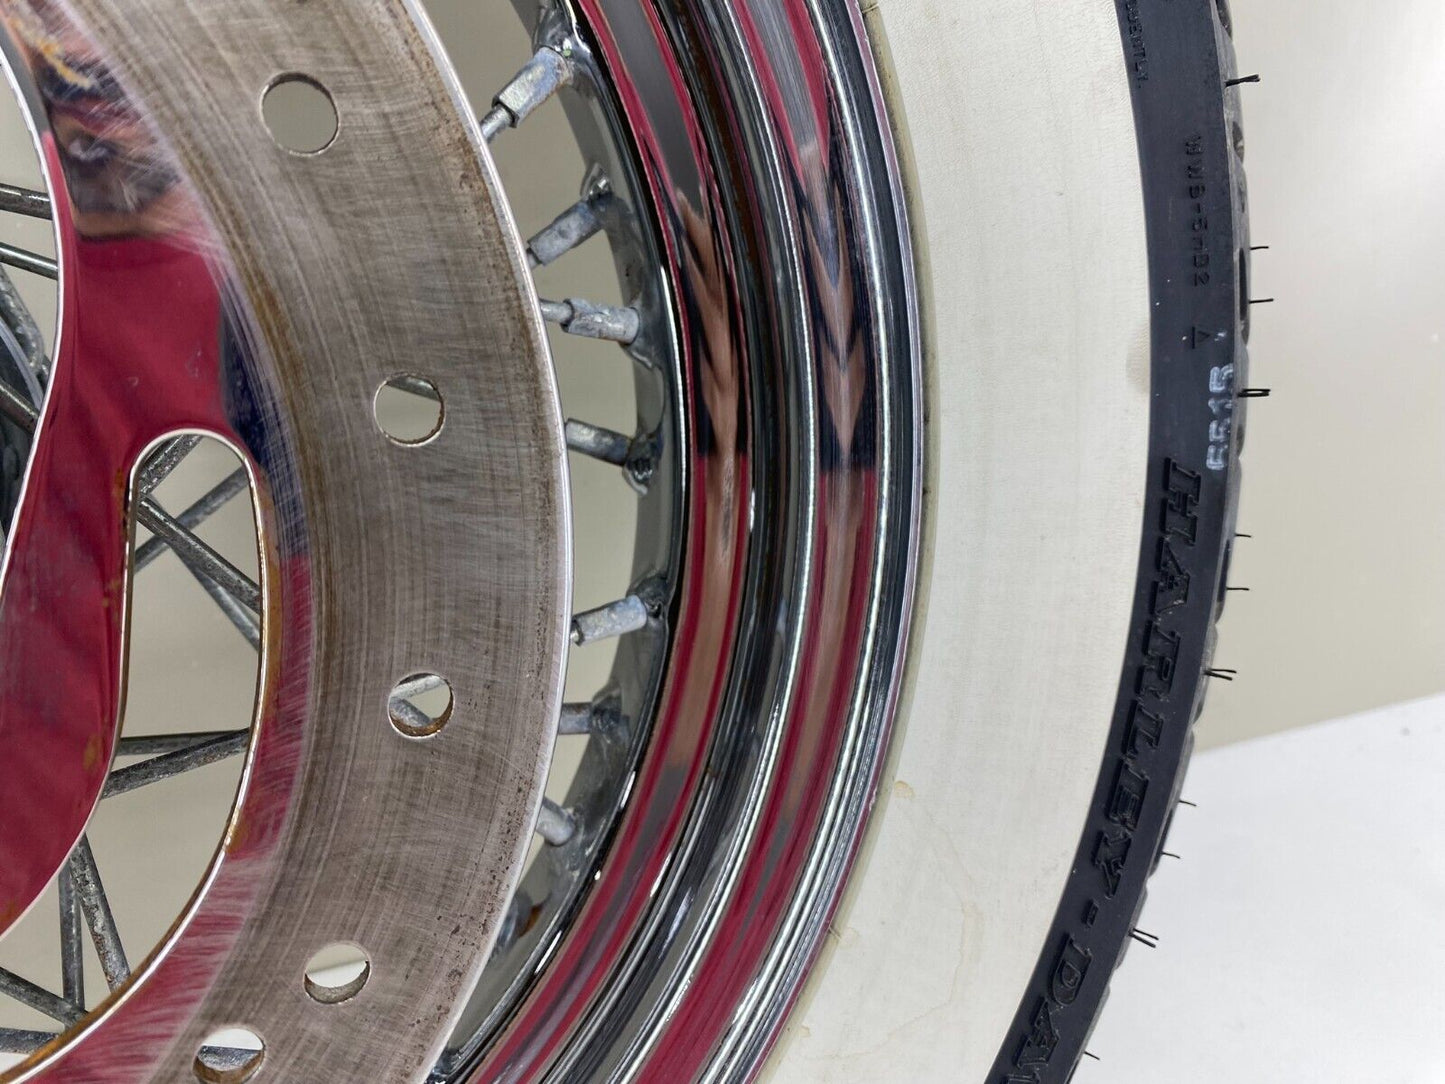 2003 HARLEY DAVIDSON SOFTAIL Heritage Front Wheel Rim Tire Spoke Laced Whitewall